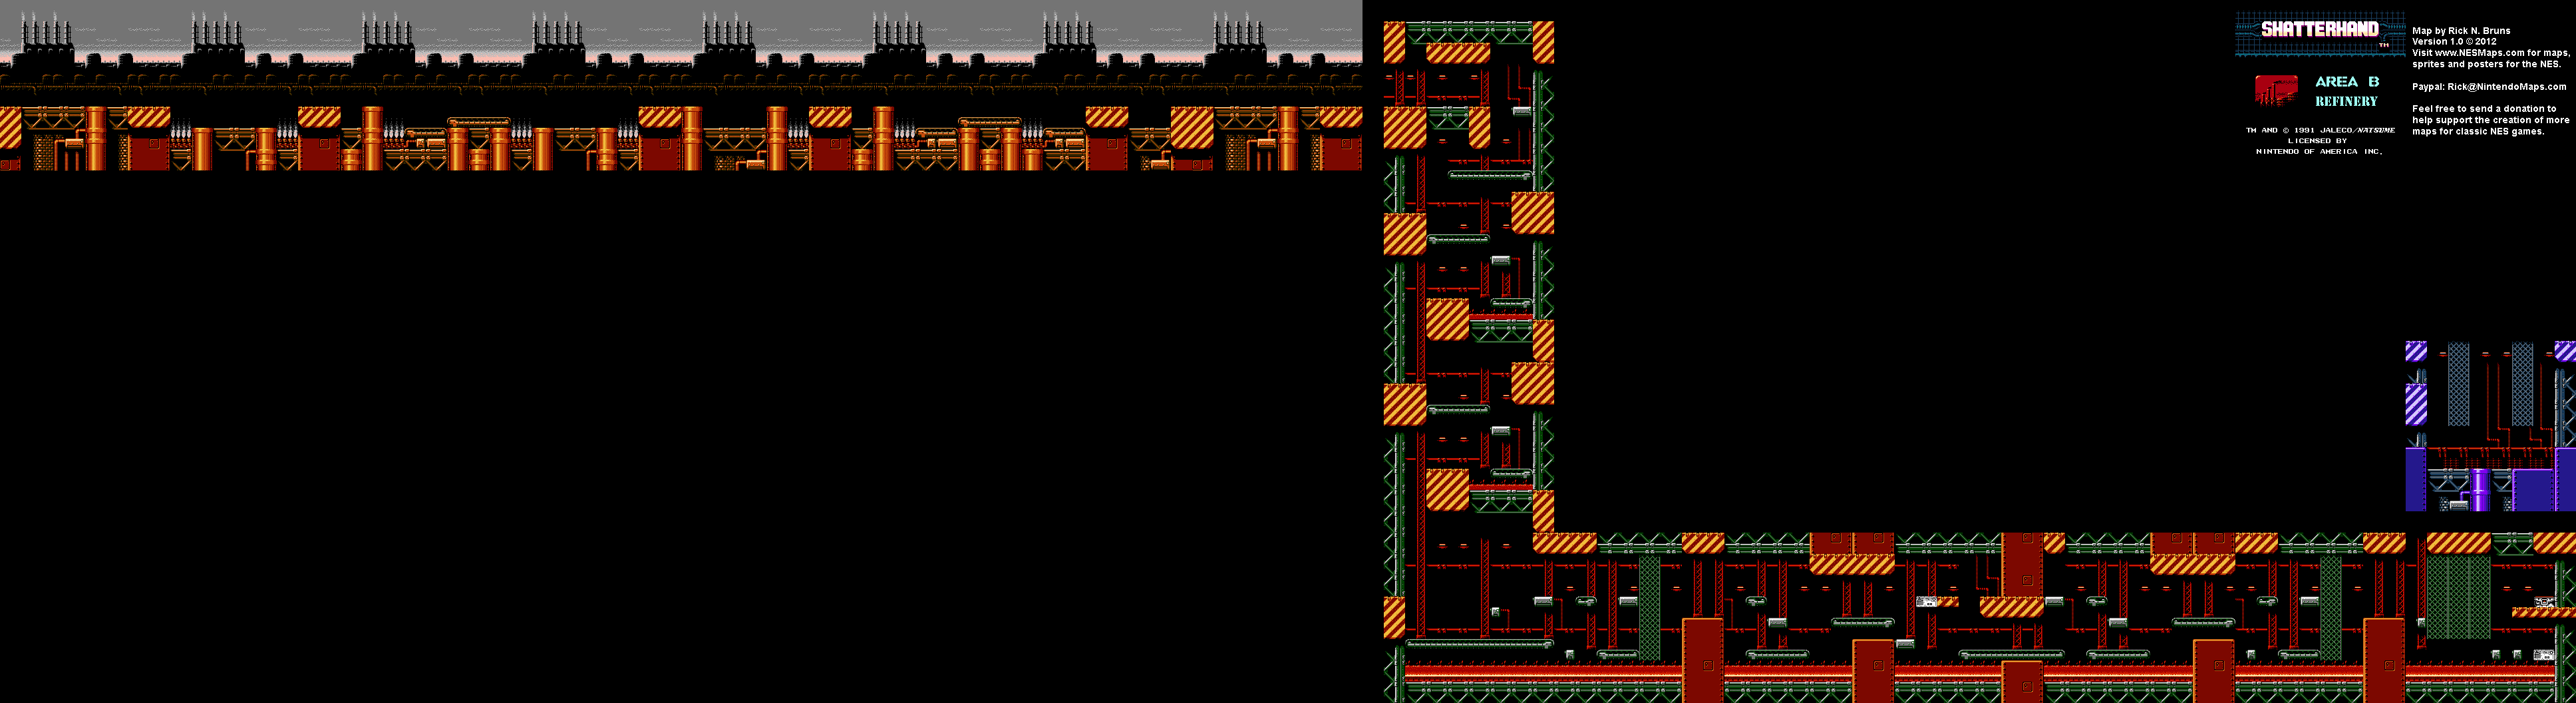 Shatterhand - Area B Refinery - Nintendo NES Map BG